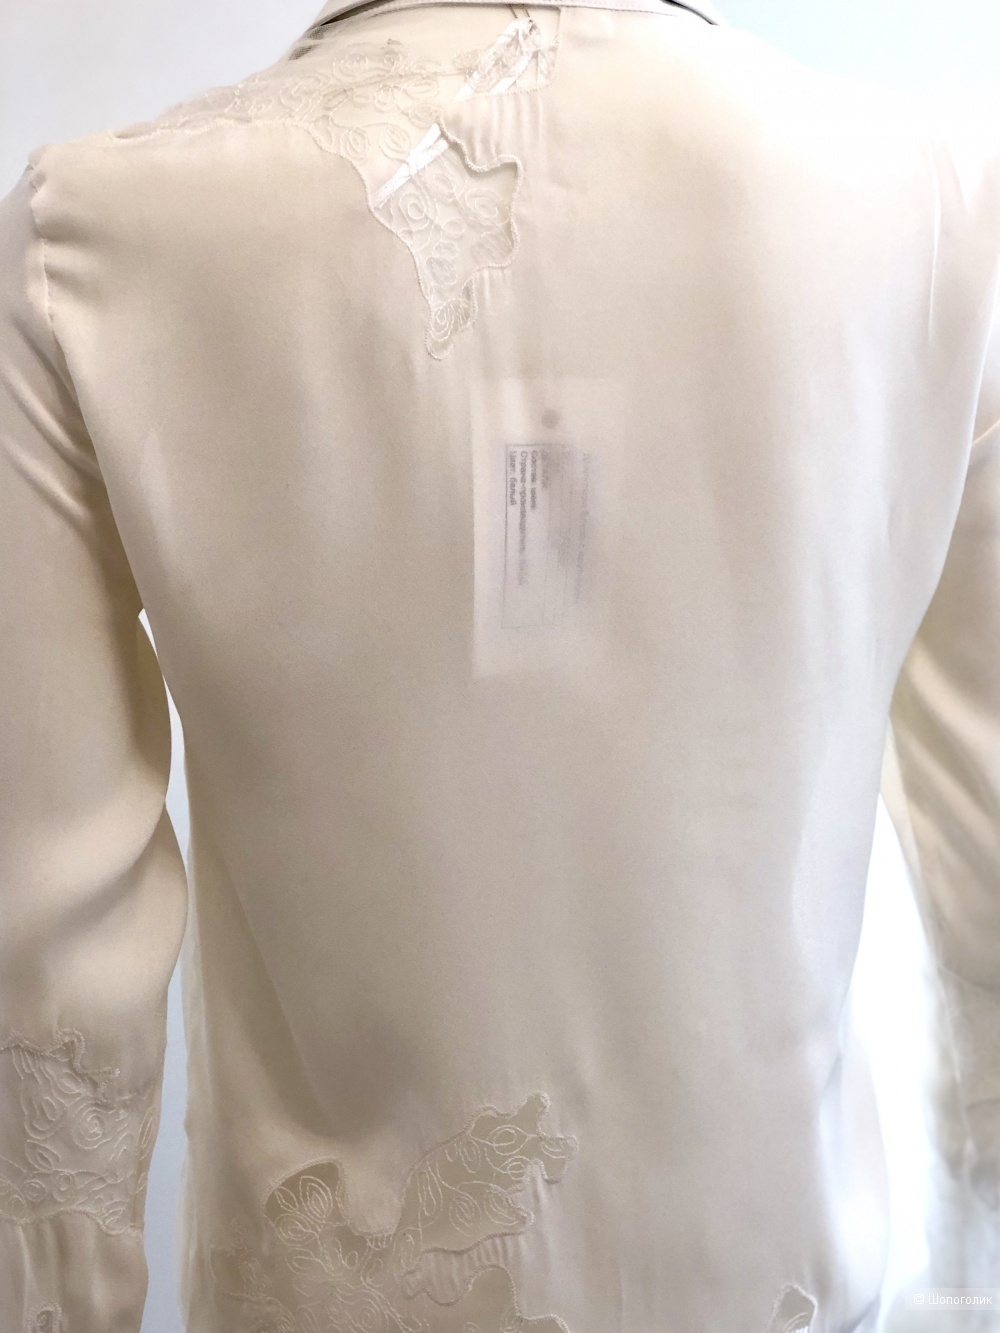 Шелковая блуза StyleTrack, XS-S